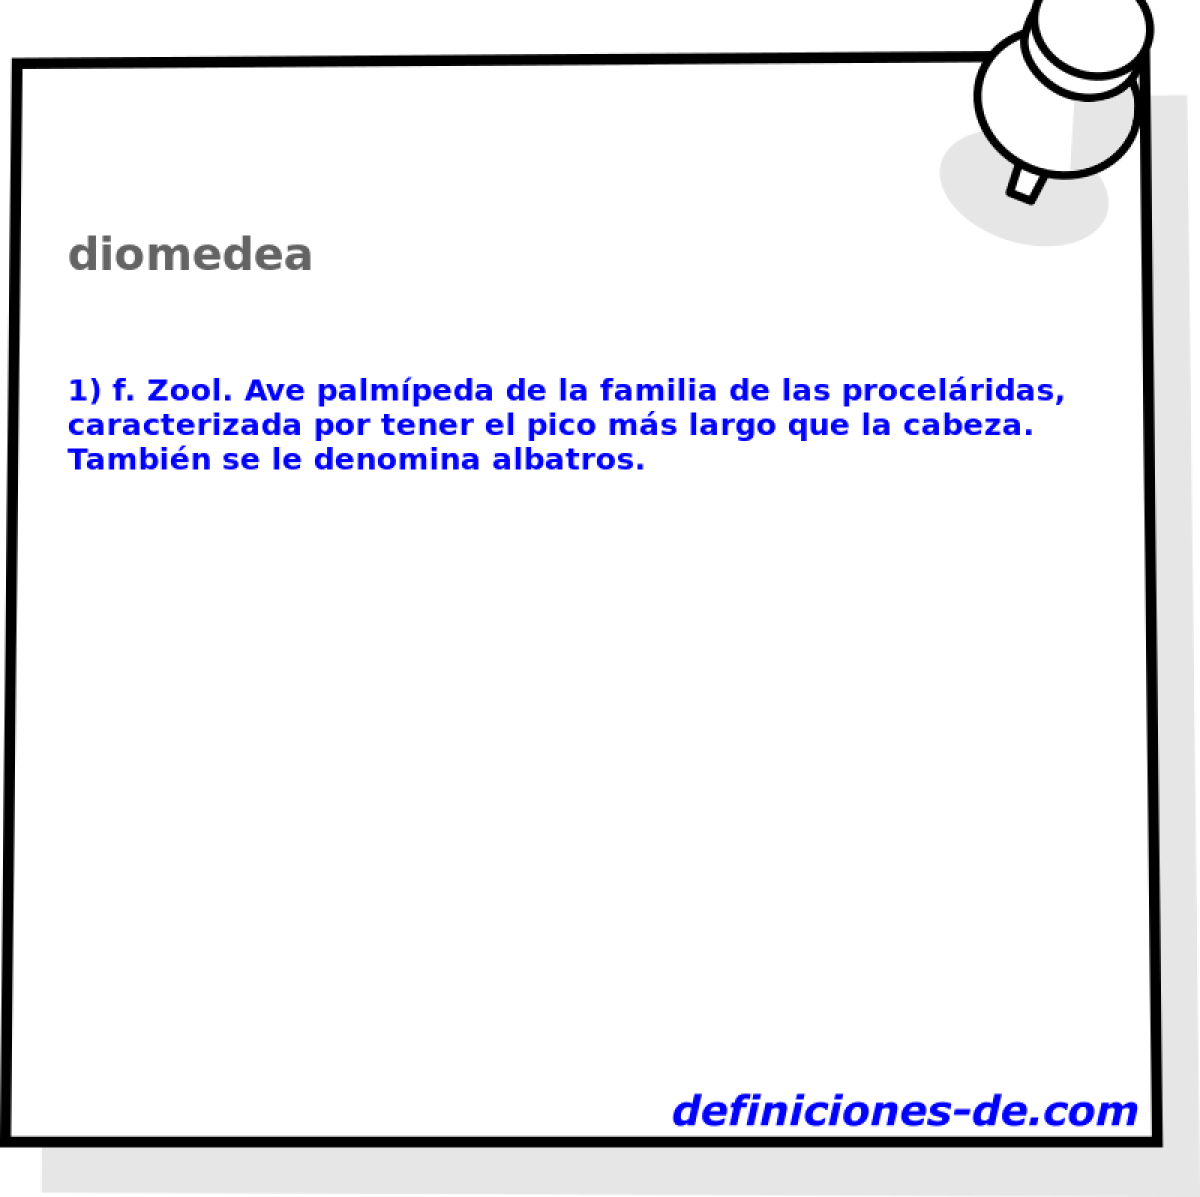 diomedea 